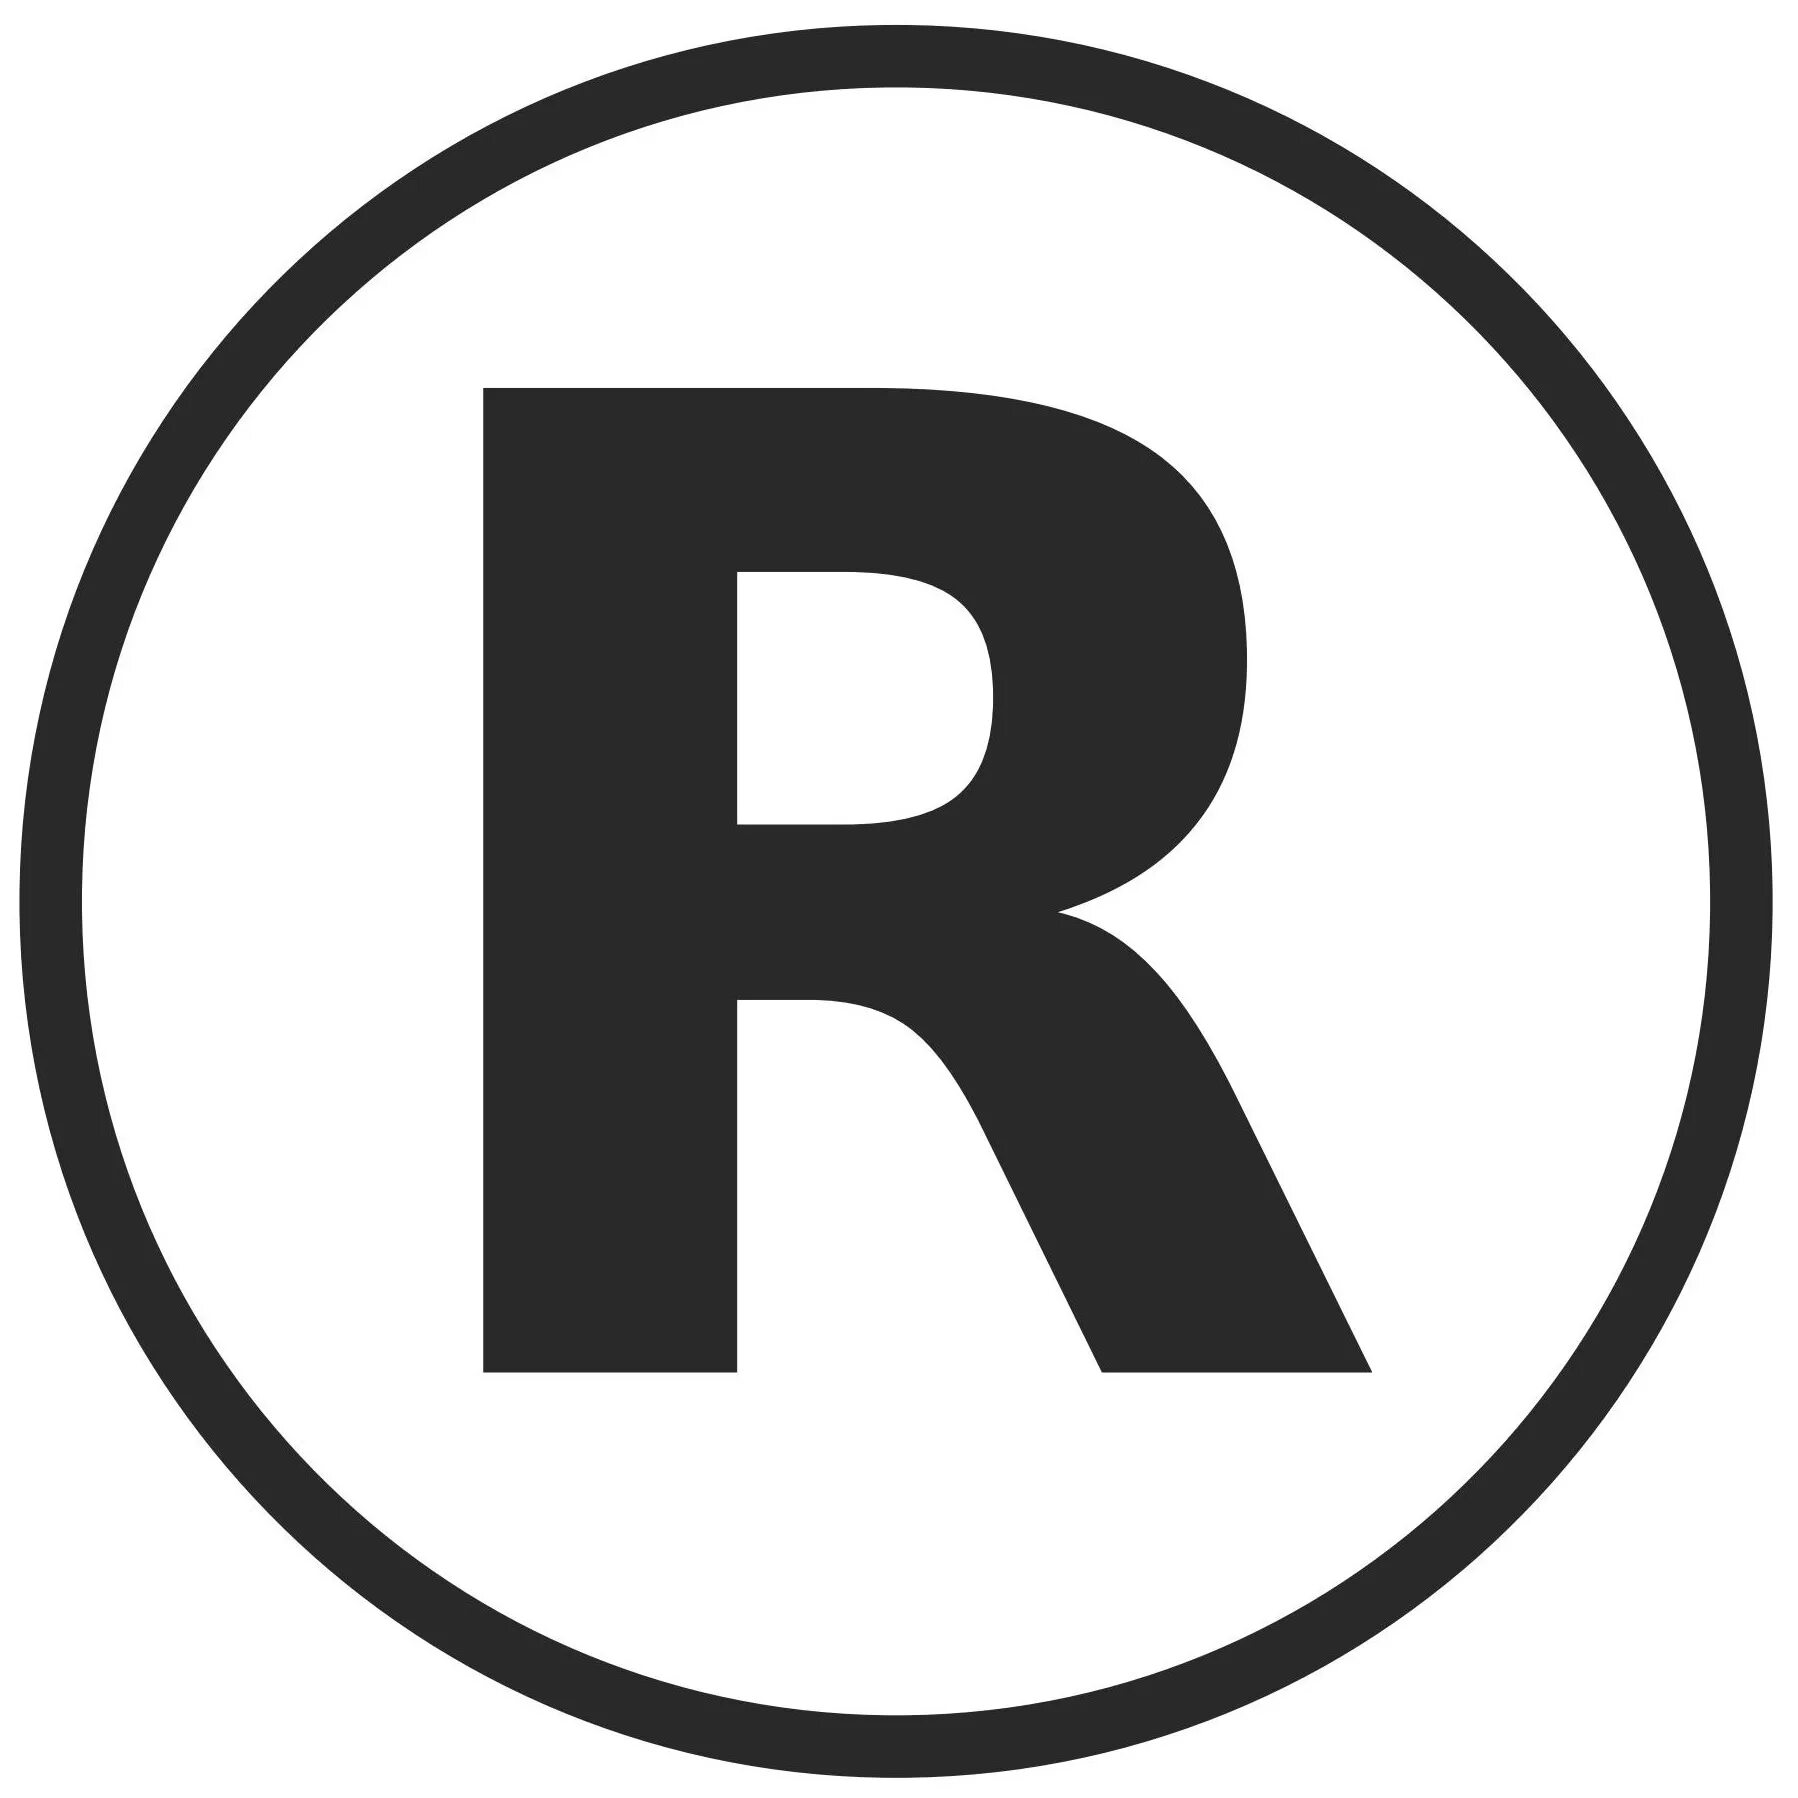 Icon r. Логотип r. Буква r. Значок буквы r. Эмблема с буквой r.